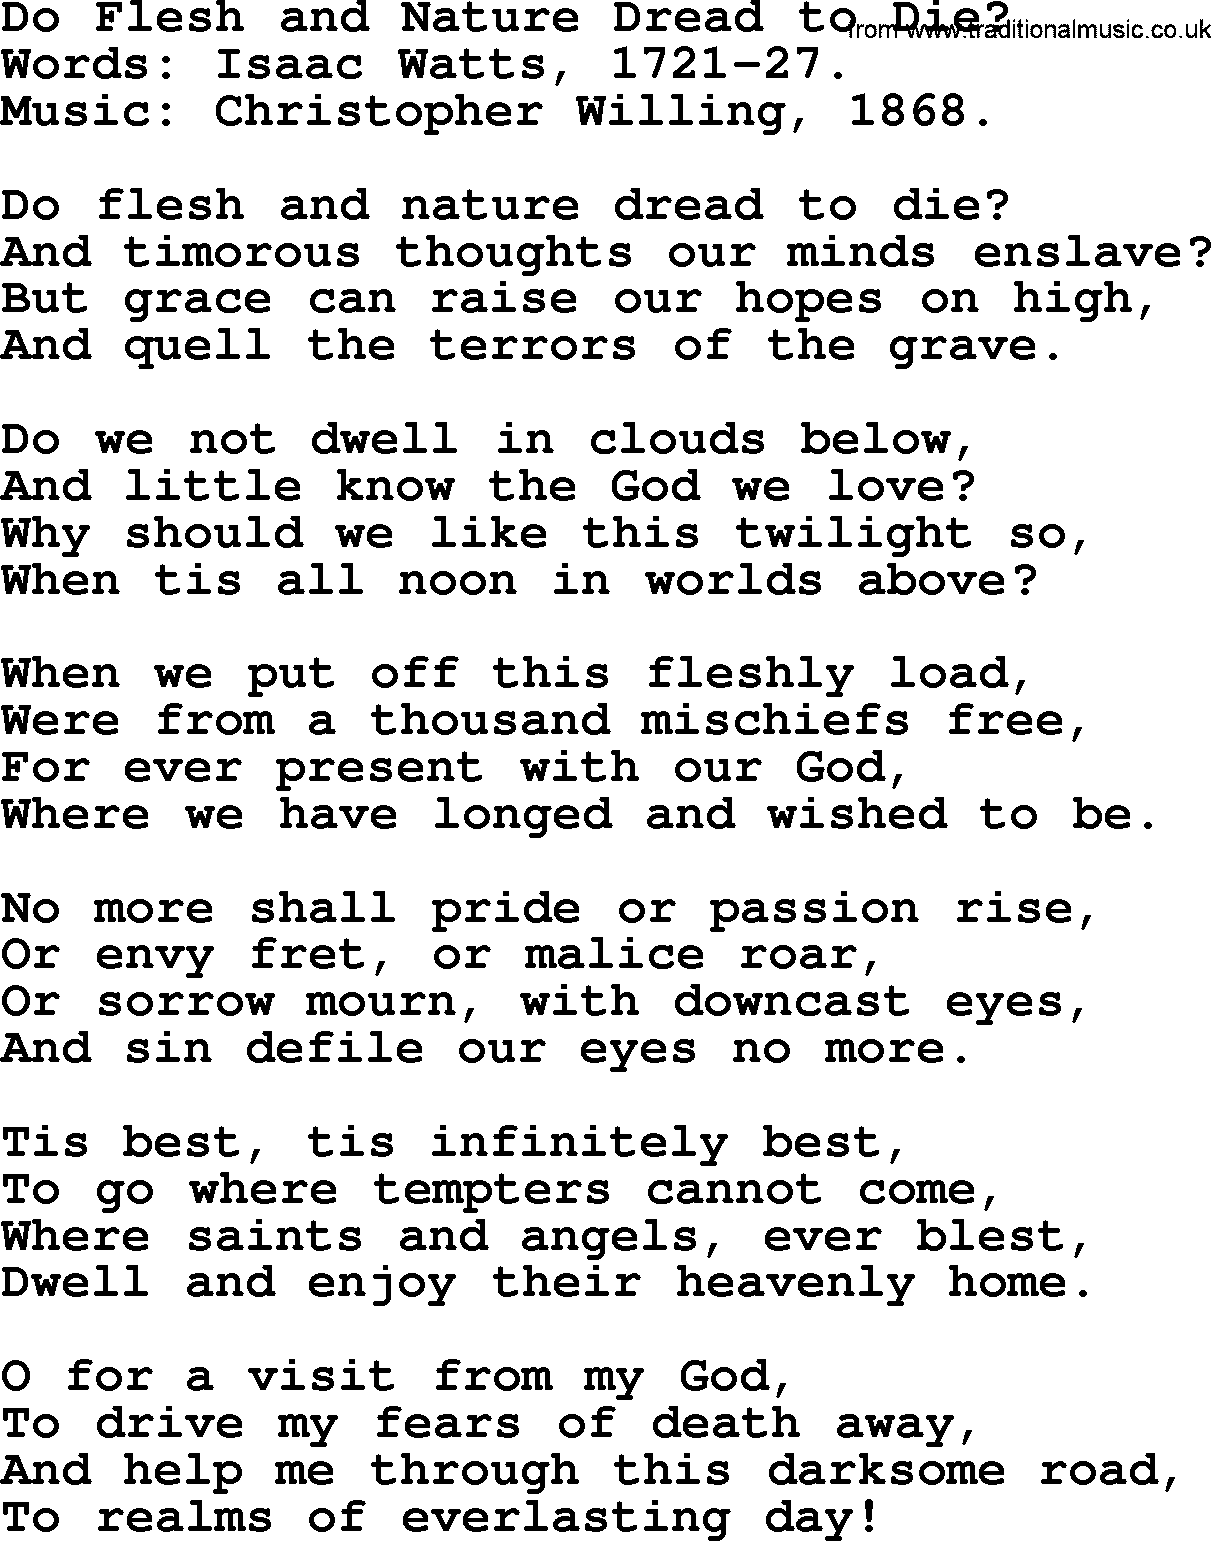 Isaac Watts Christian hymn: Do Flesh and Nature Dread to Die_- lyricss